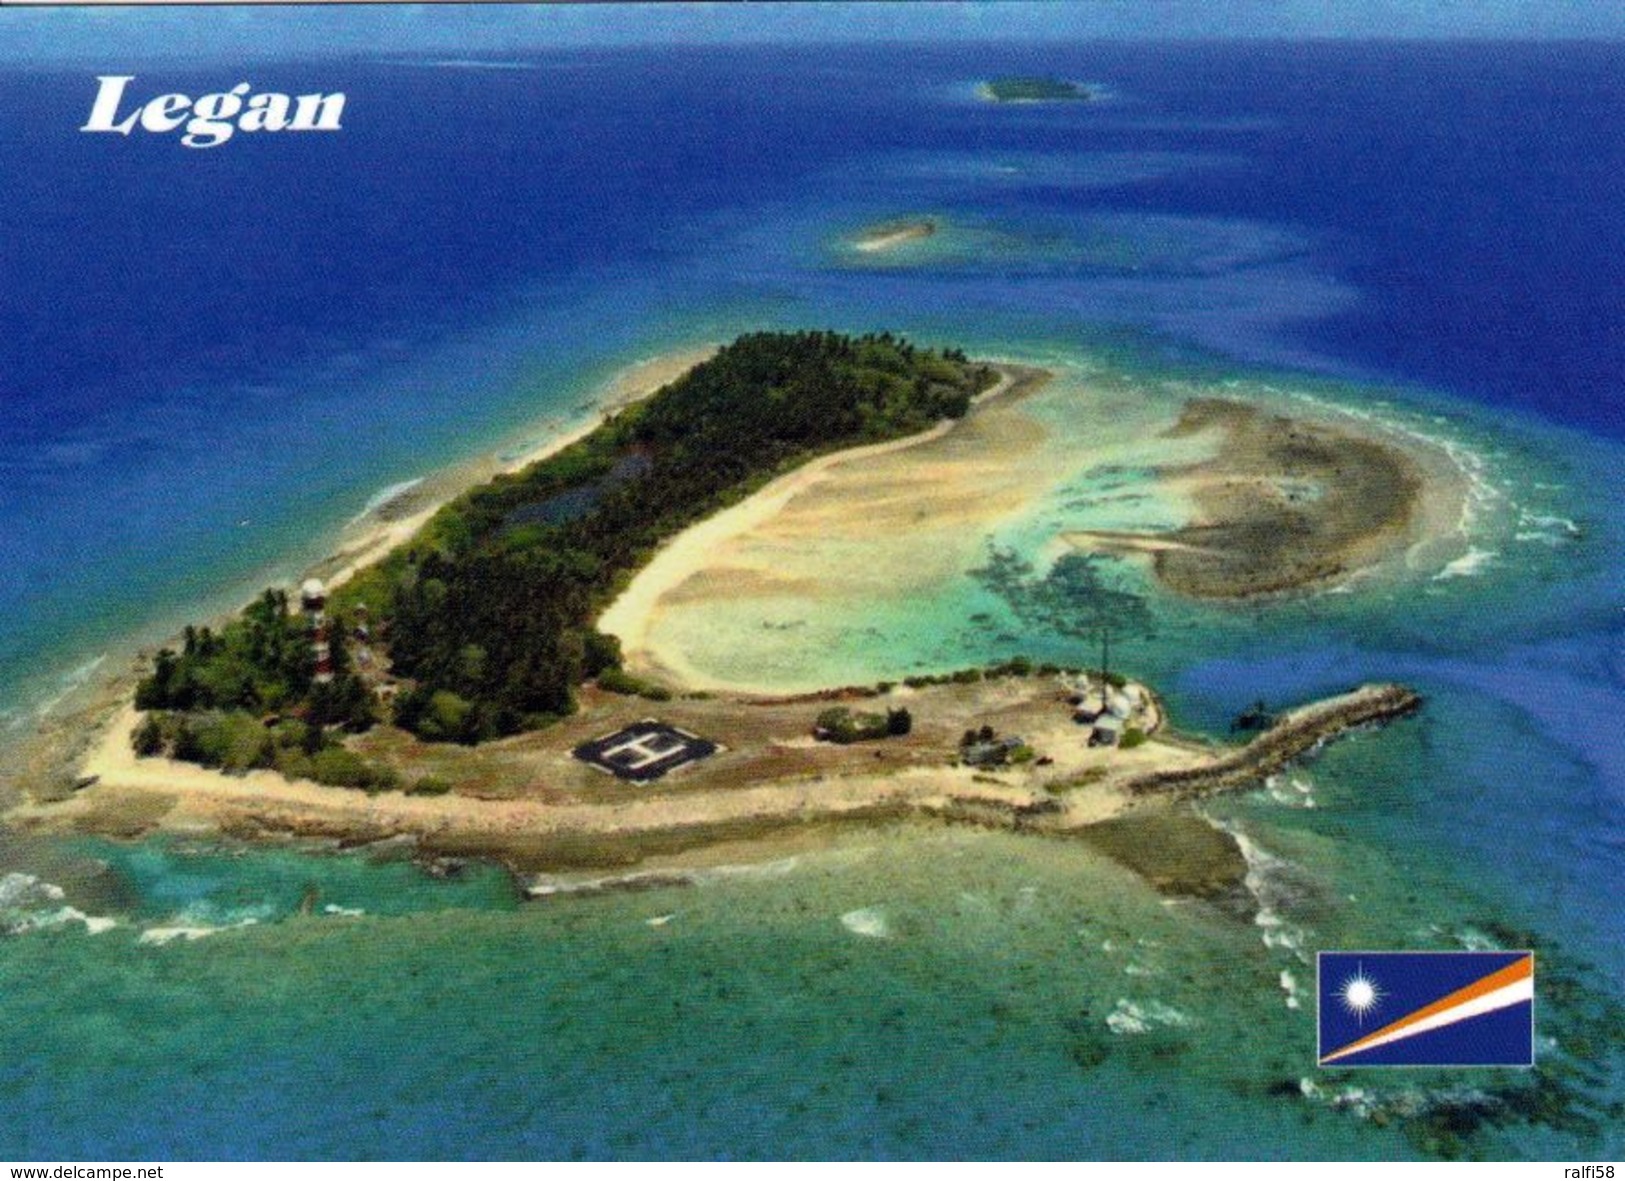 1 AK Marshall Islands * Blick Auf Die Insel Legan - Luftbildaufnahme * - Marshall